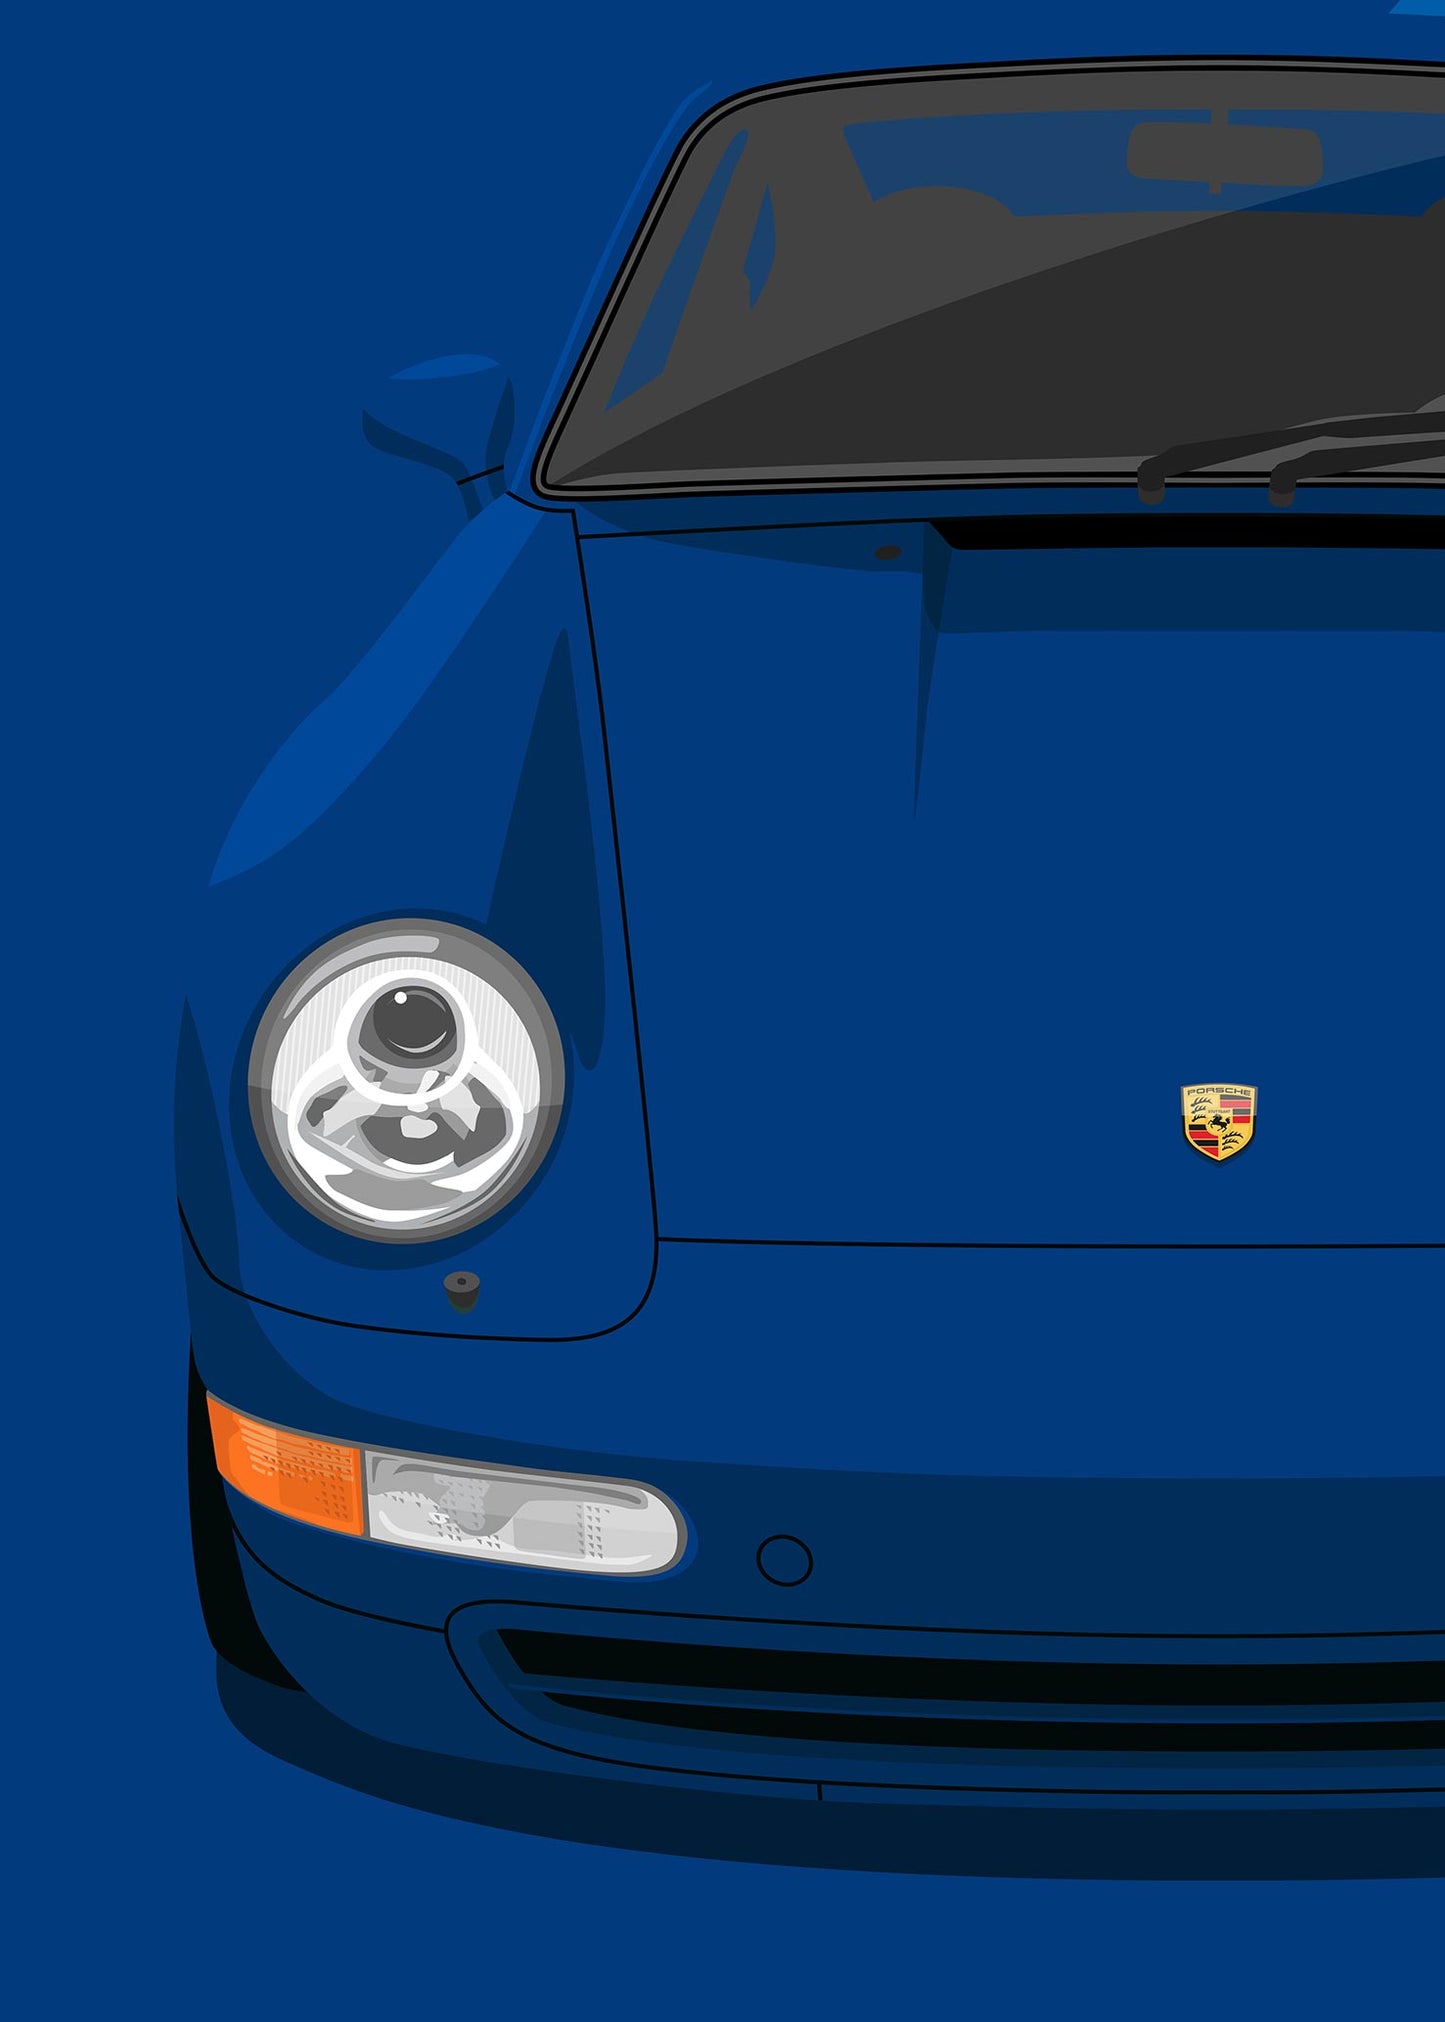 1994 Porsche 911 (993) Carrera 2 Ocean Blue - poster print